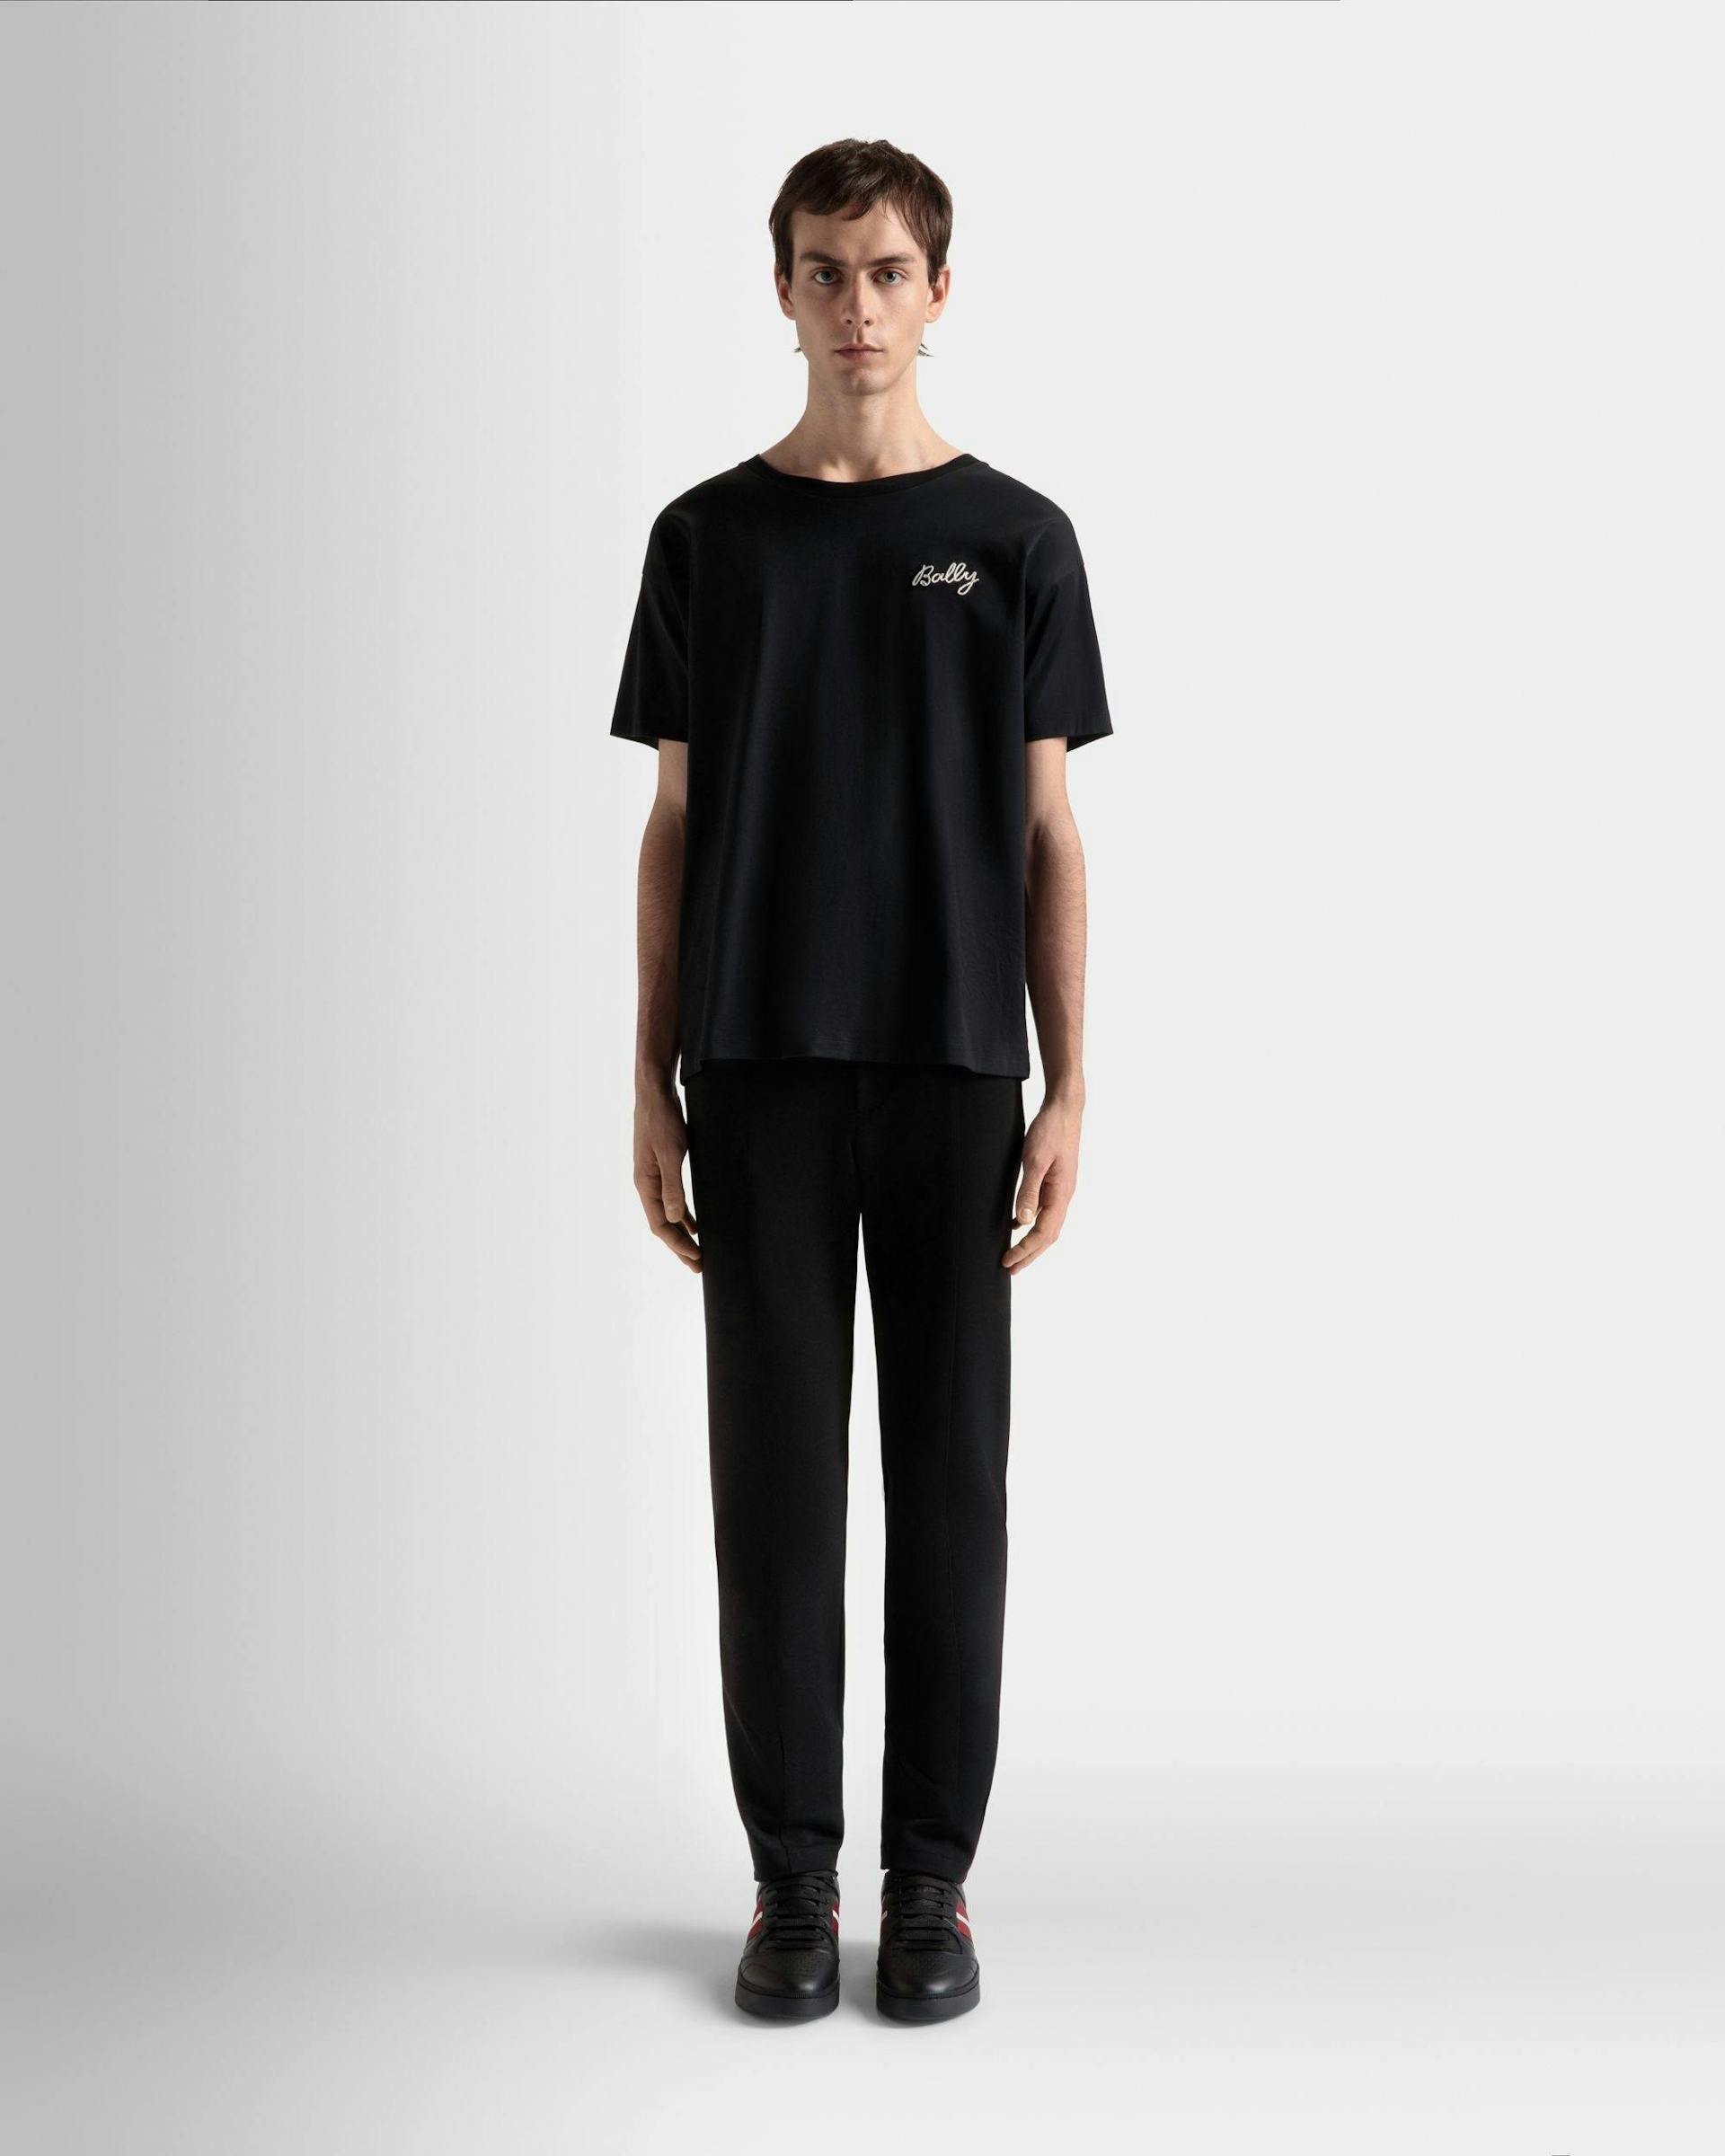 Men's T-Shirt In Black Cotton | Bally | On Model Front